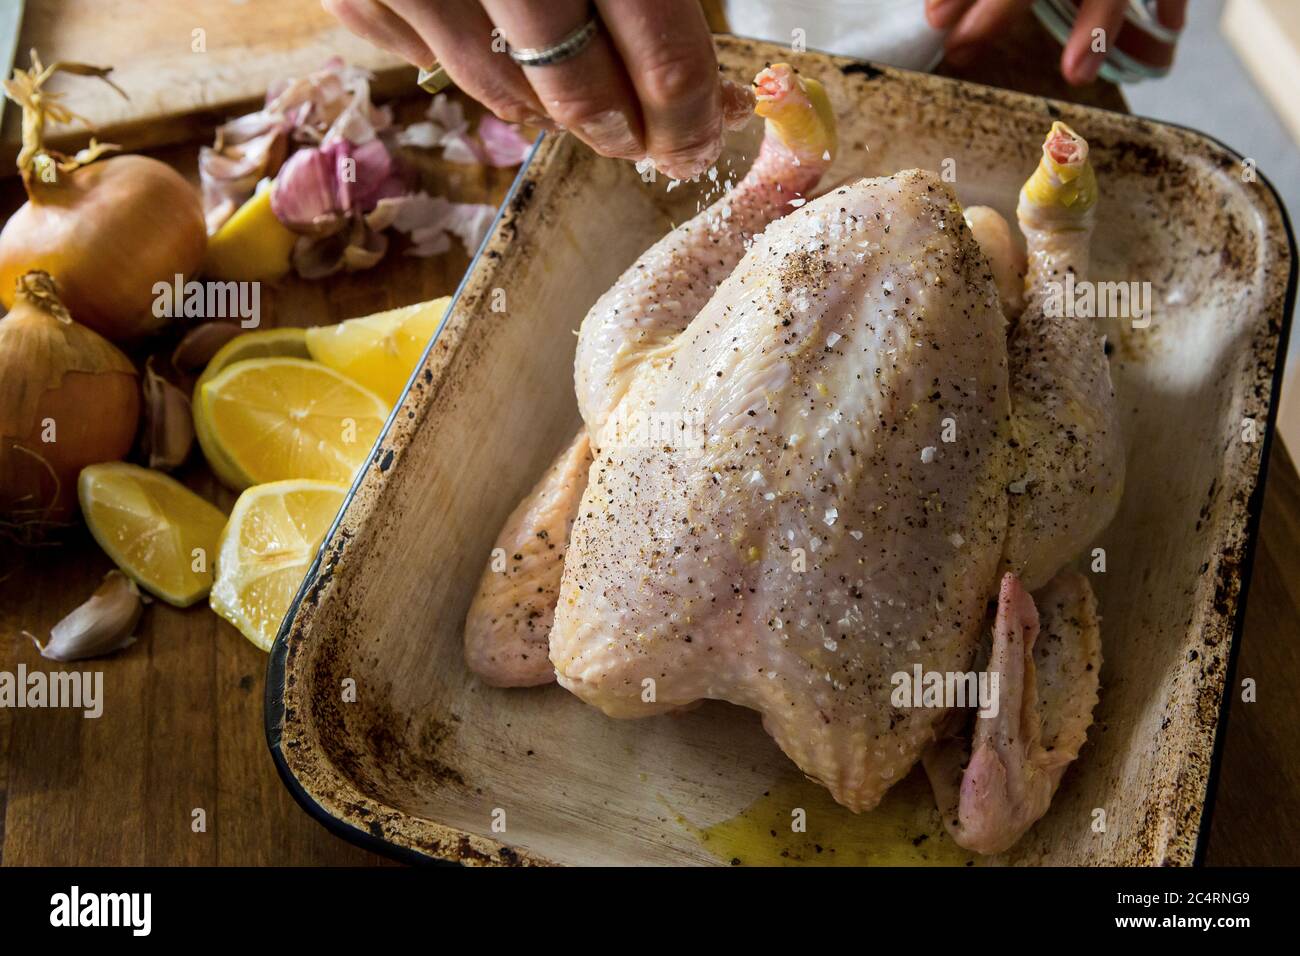 Prepping lemon and garlic chicken recipe for roasting Stock Photo